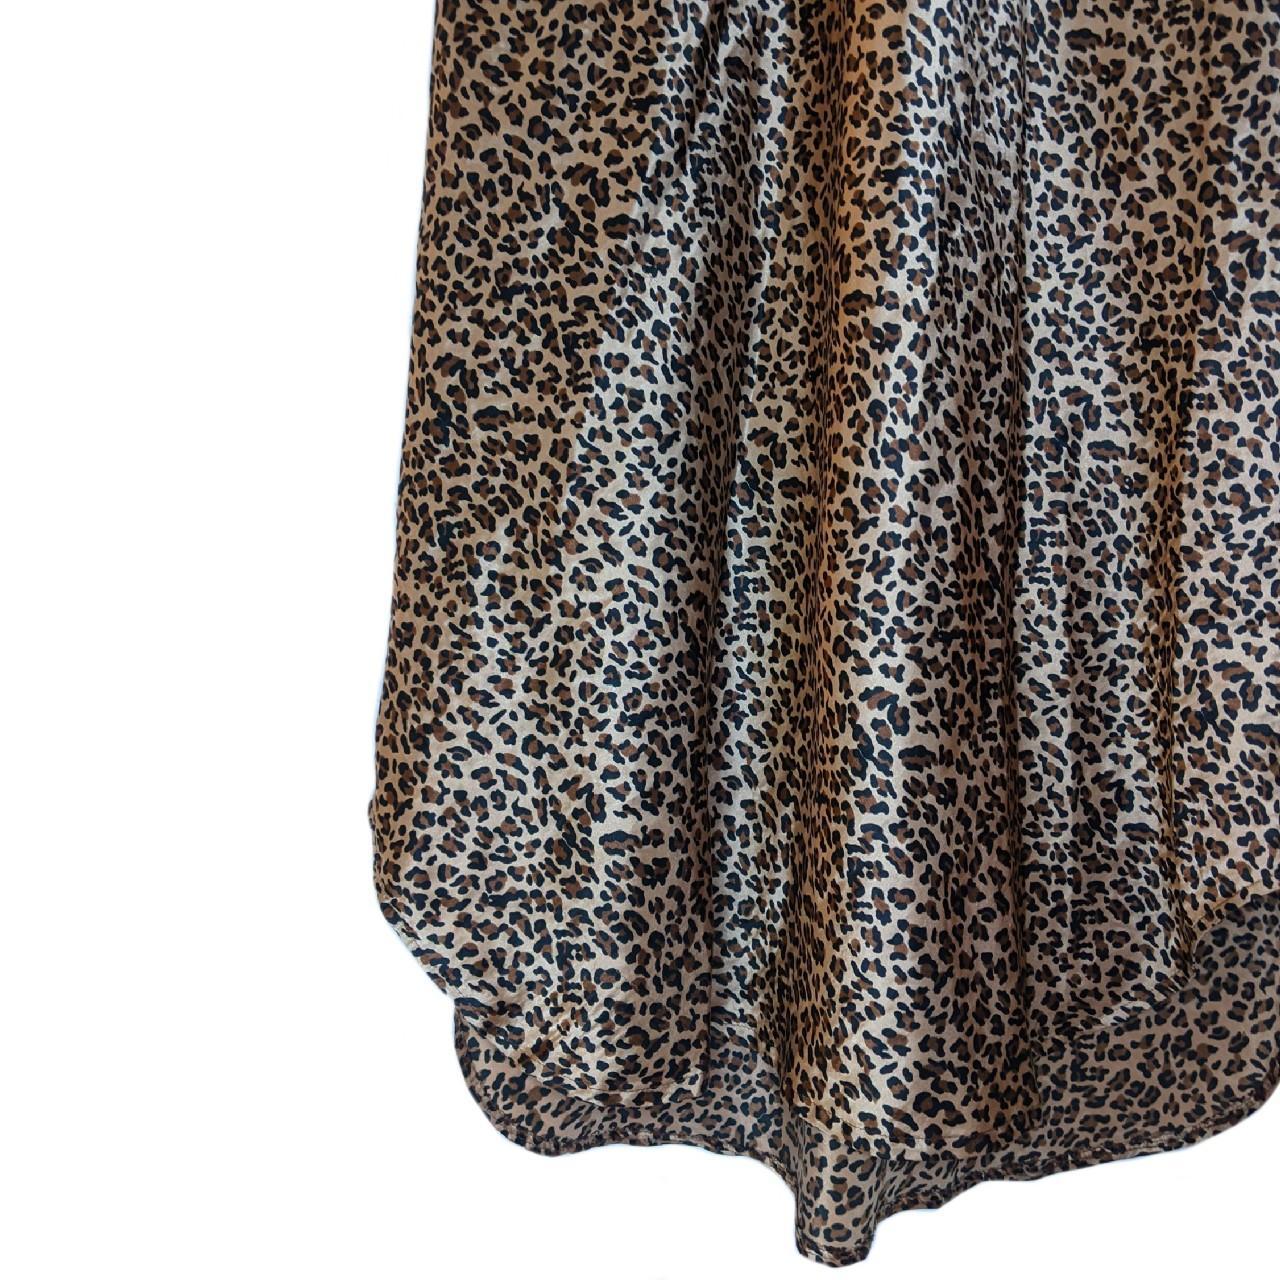 90s leopard print slip dress Details - Maxi... - Depop